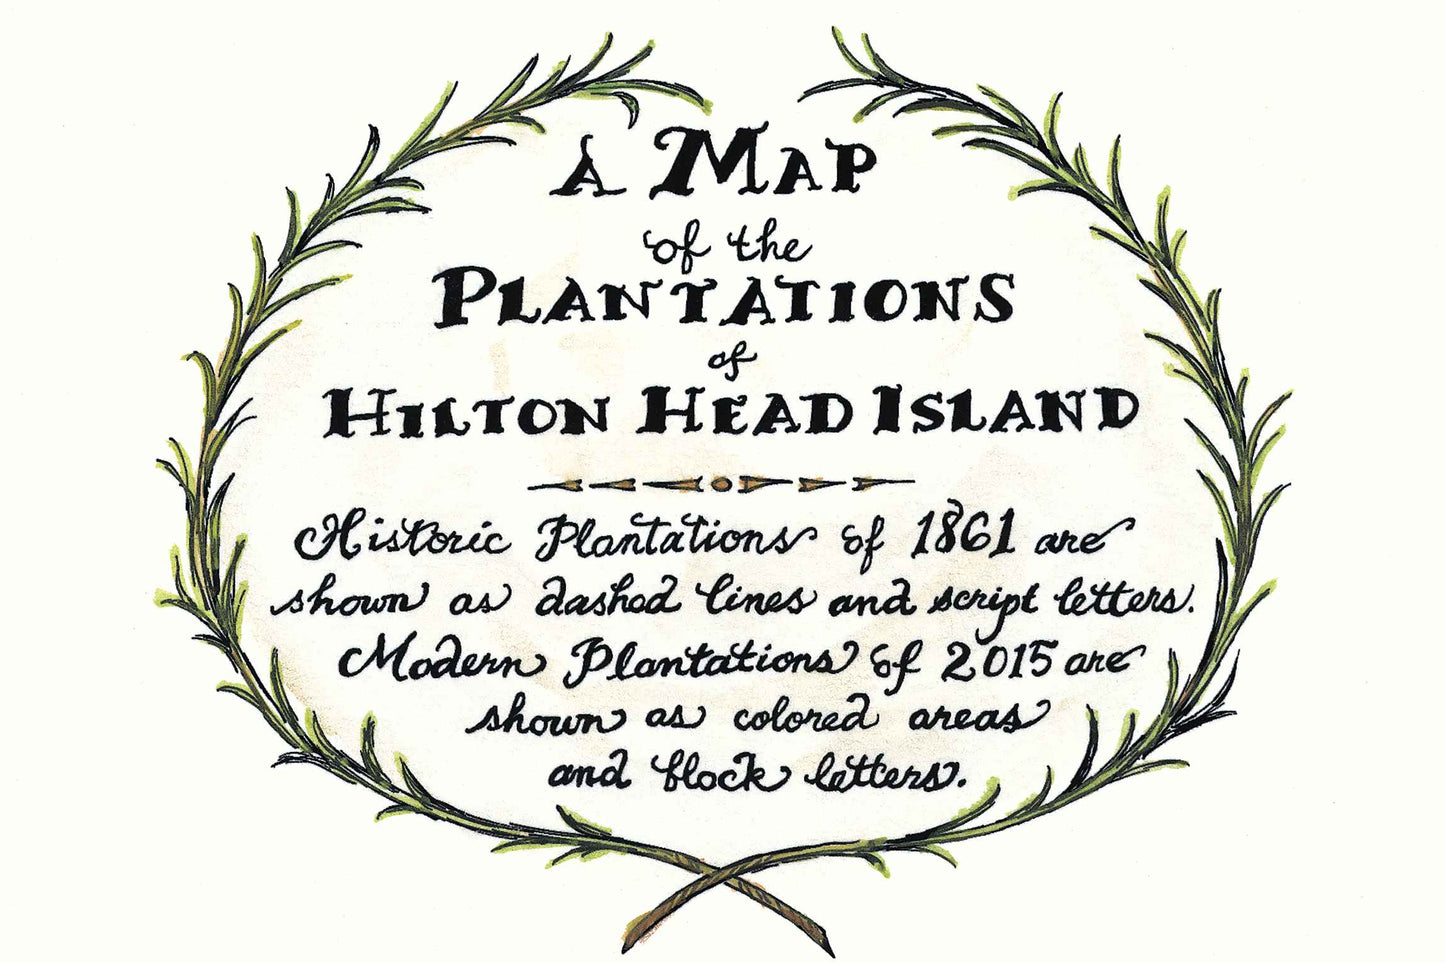 Plantations of Hilton Head Island, South Carolina